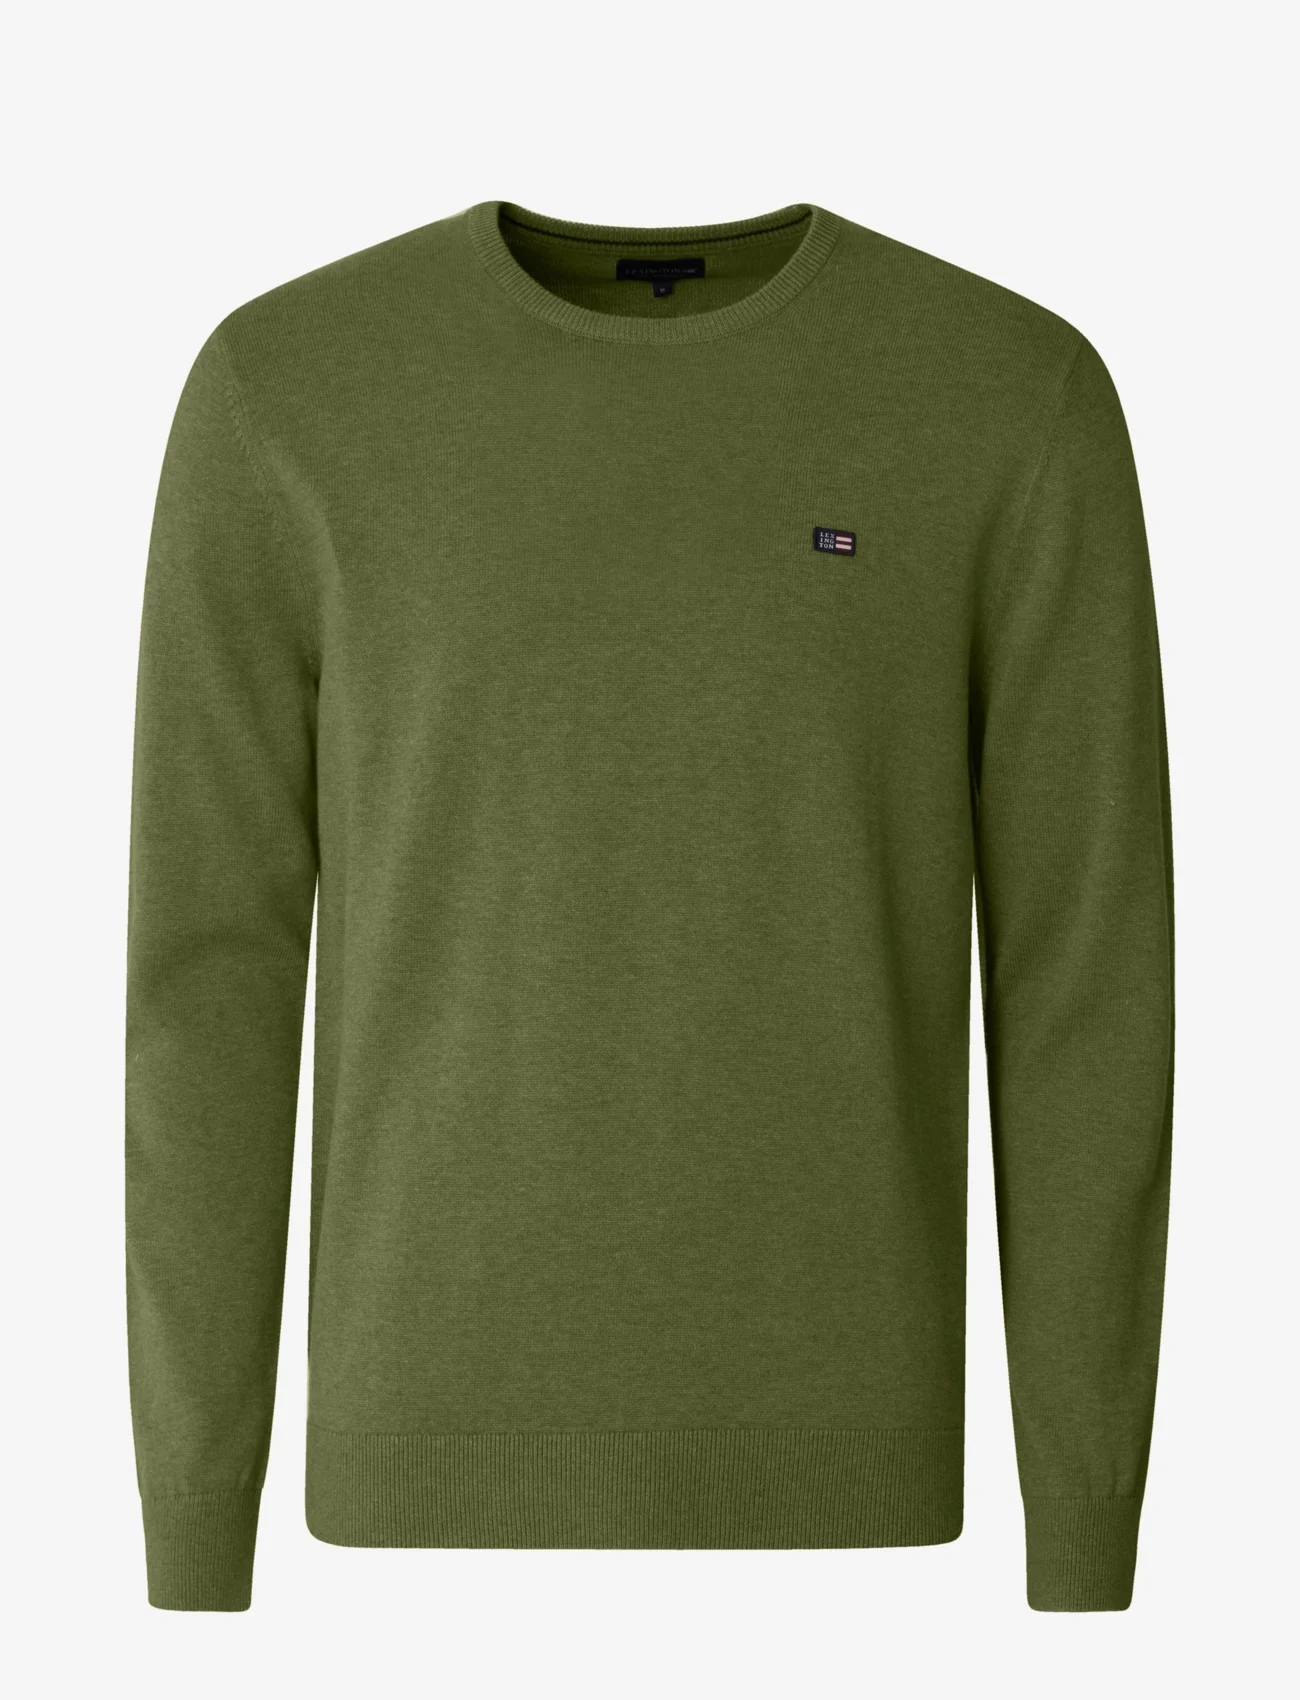 Lexington Clothing - Bradley Cotton Crew Sweater - rund hals - green - 0